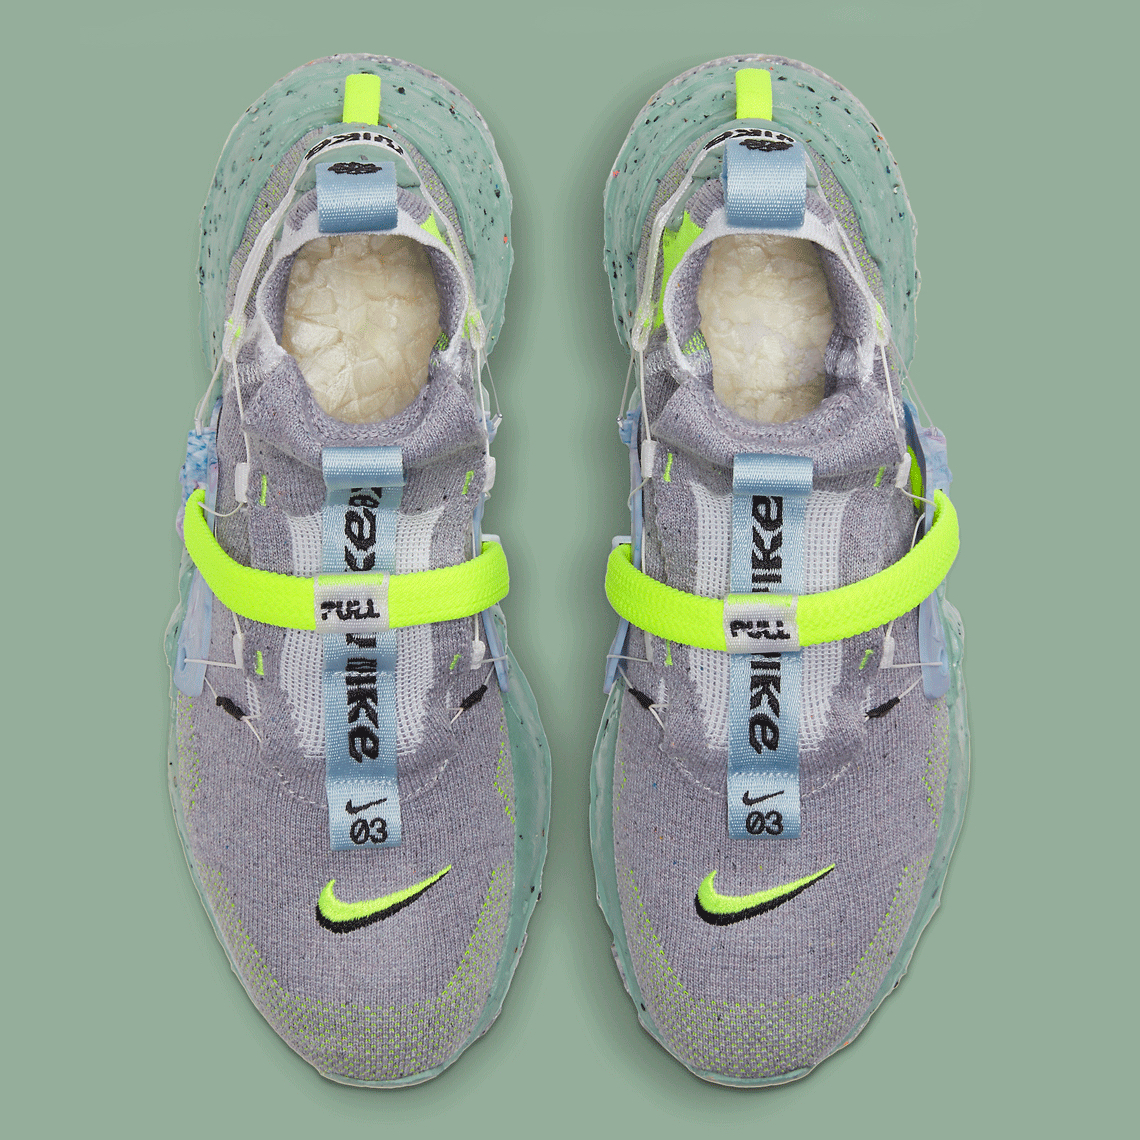 Nike Sportswear Leggings Healing Jade Cq3989 004 05